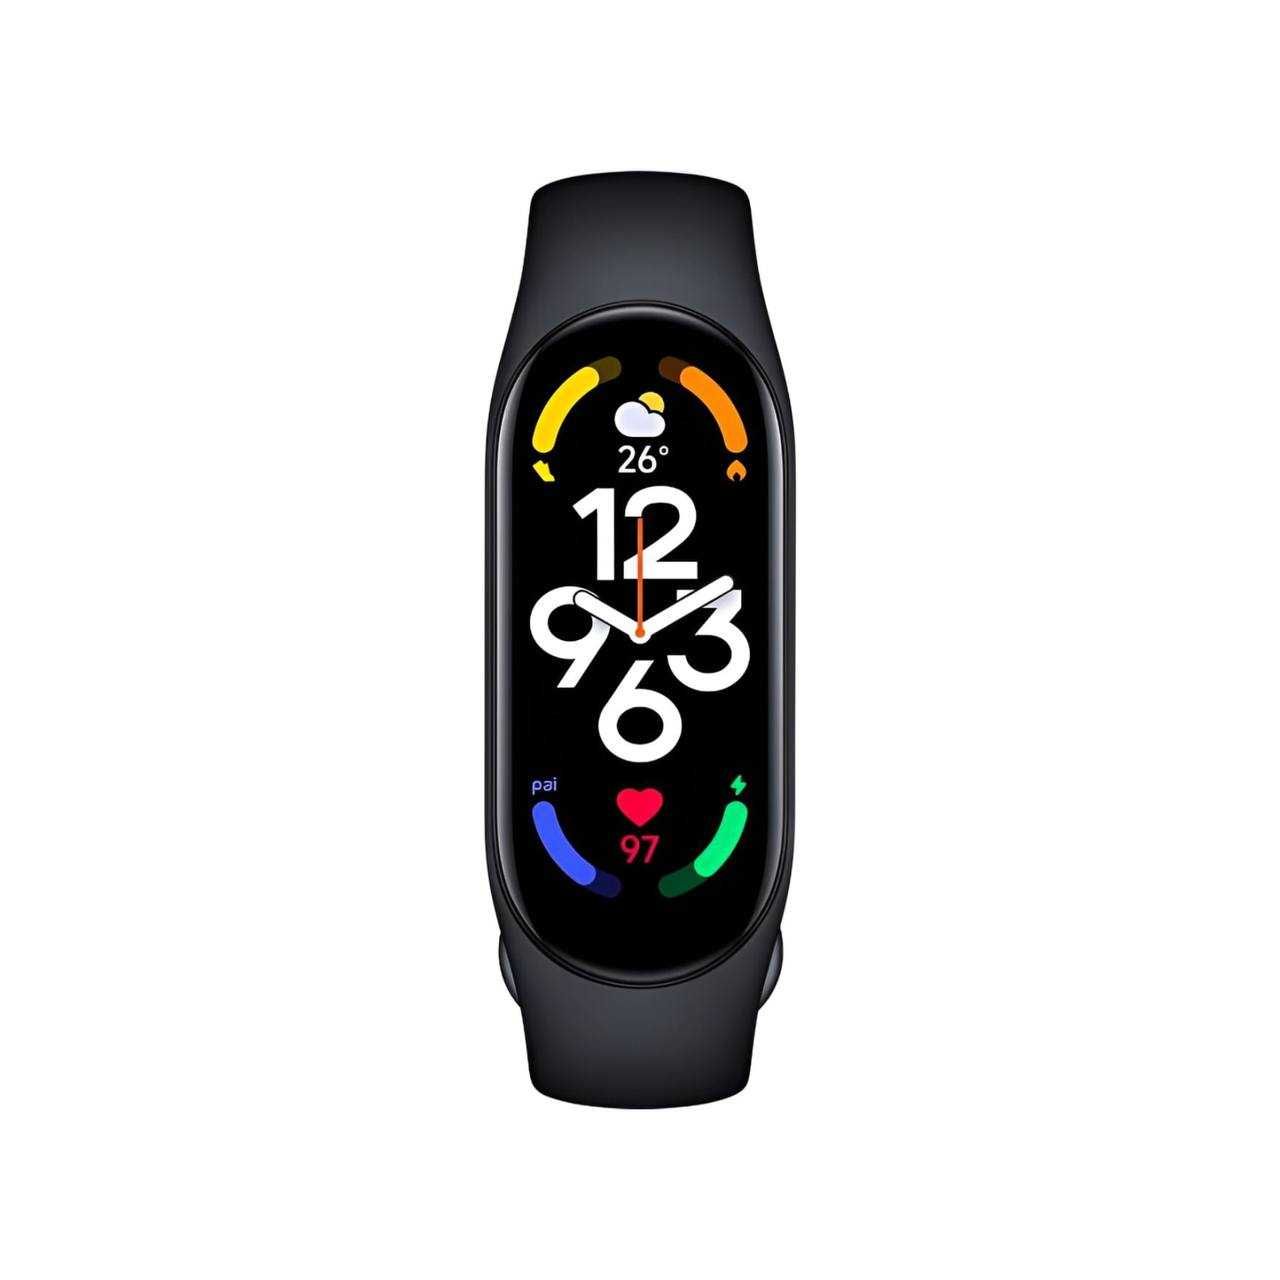 Фитнес браслет FitPro Smart Band M7 (смарт часы, пульсоксиметр, пульс)